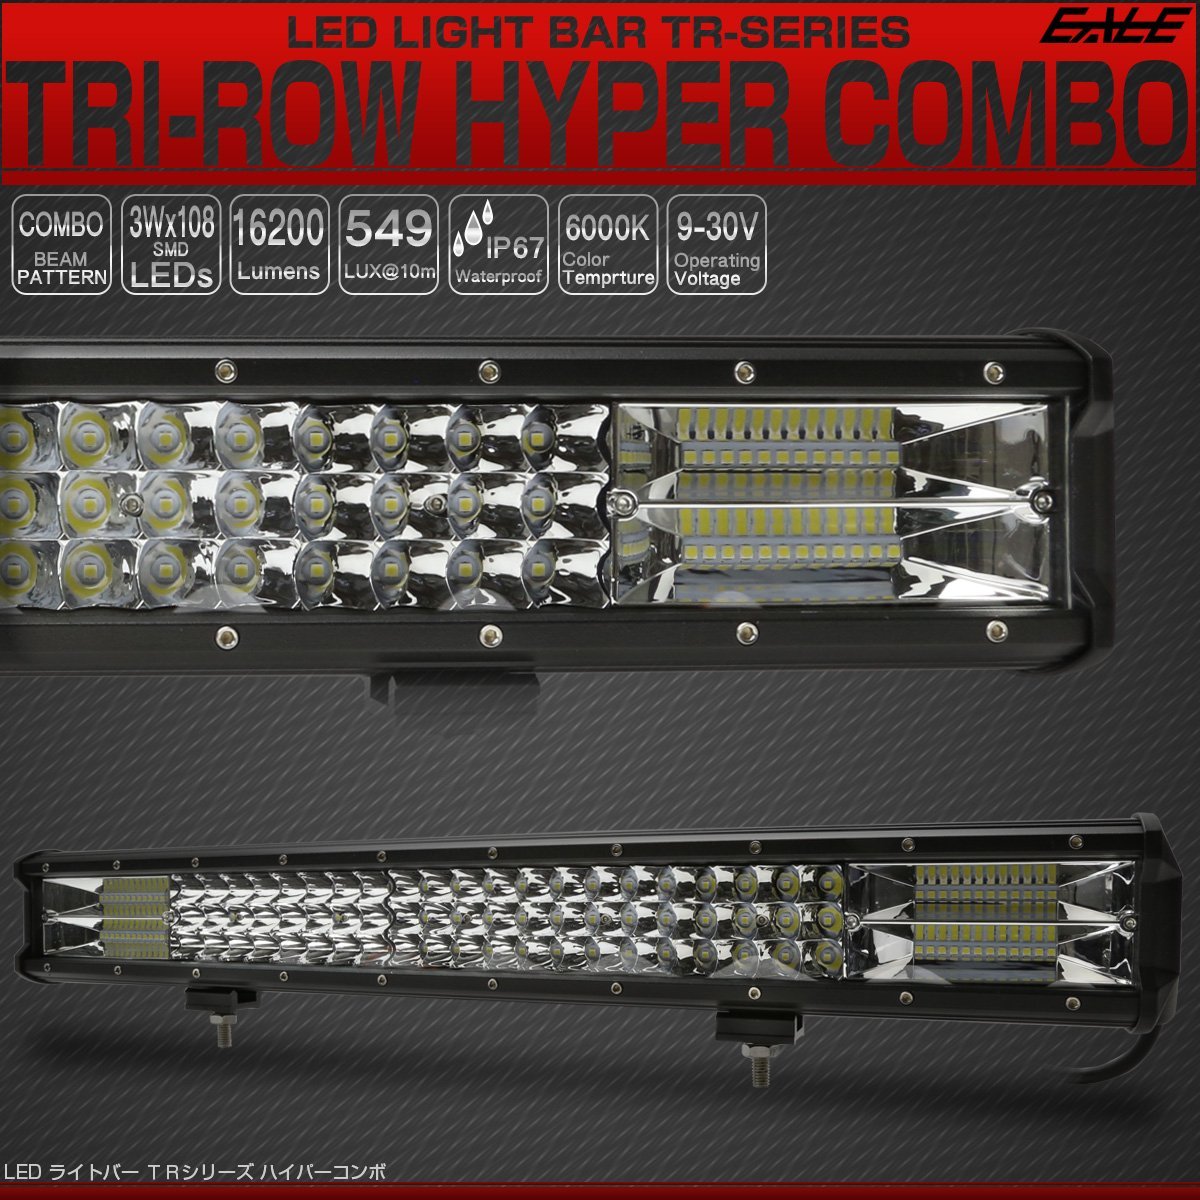 LED ライトバー 58.5cm 324W TRI-ROW ハイパーコンボ 23インチ 16200lm 12V 24V 対応 作業灯 ワークライト P-524_画像1